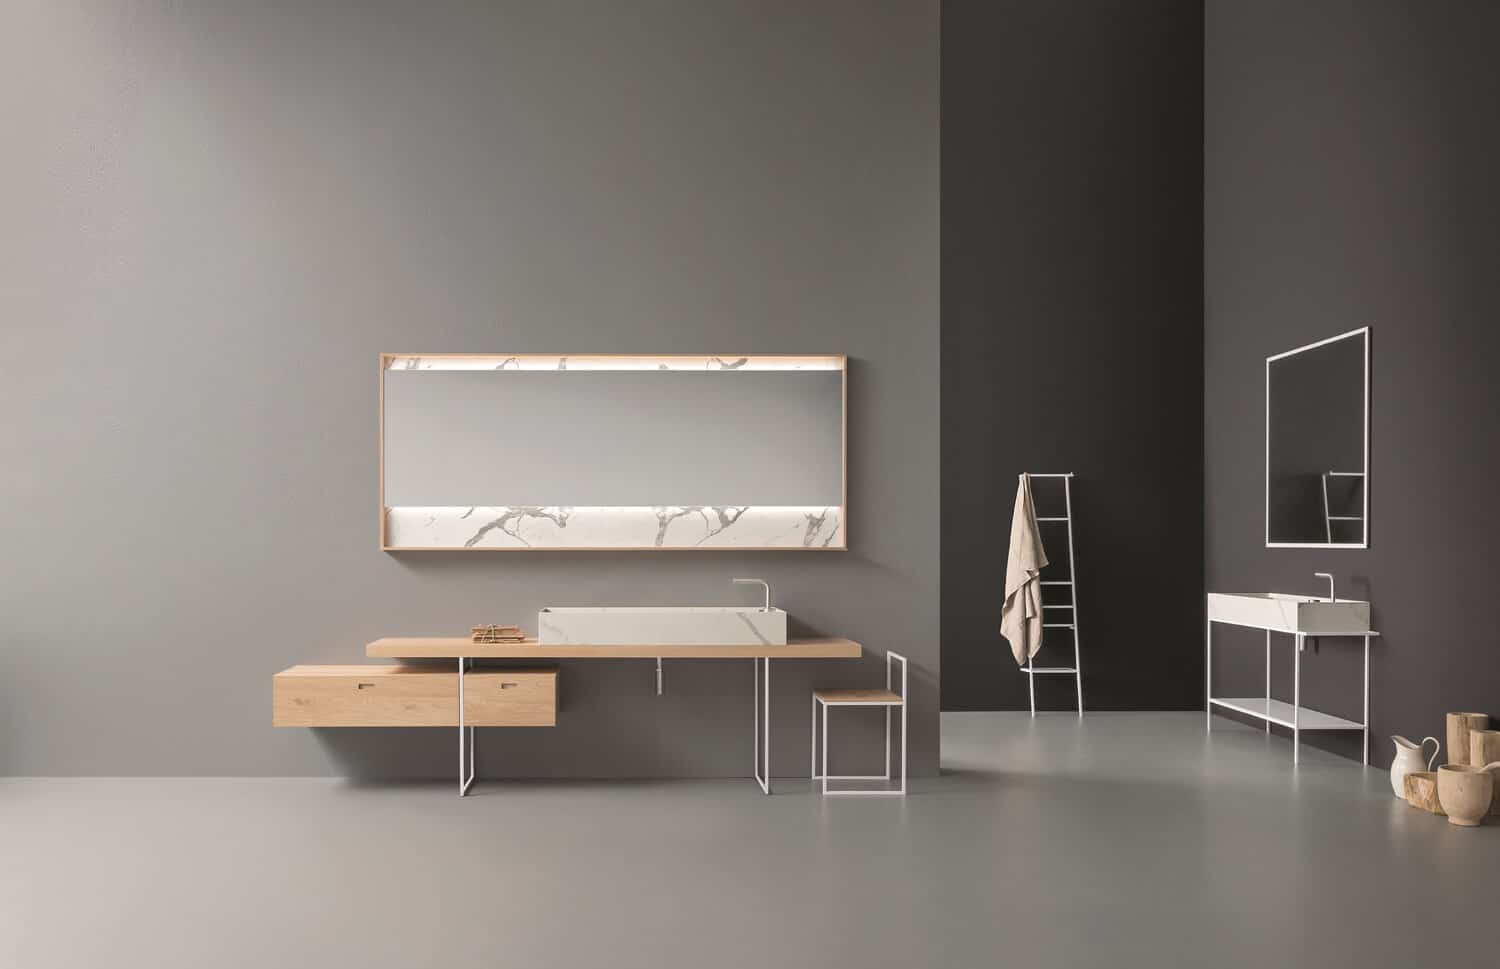 Rovere Naturale wood veneer (cabinets and top) and Statuario Bianco Laminam (washbasin) create an elegant contrast.